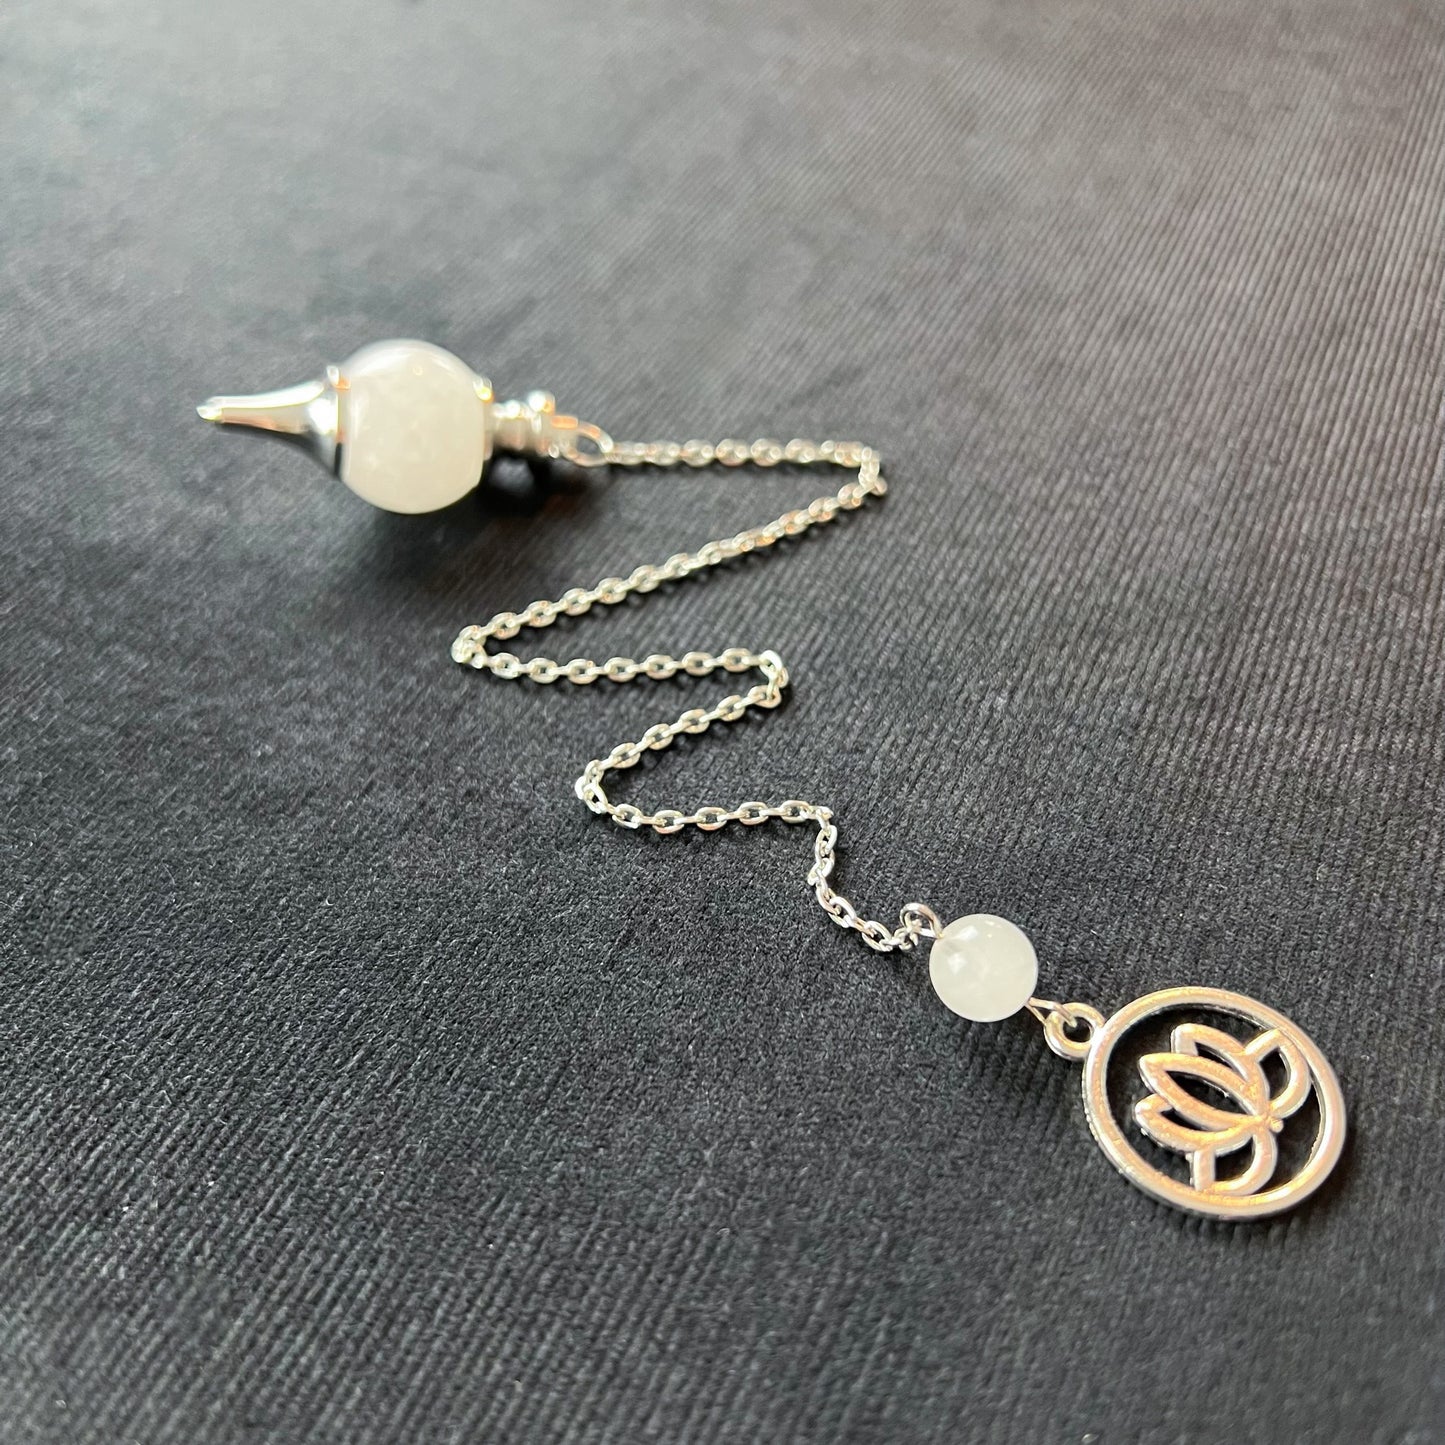 Clear quartz and lotus Sephoroton dowsing pendulum - The French Witch shop